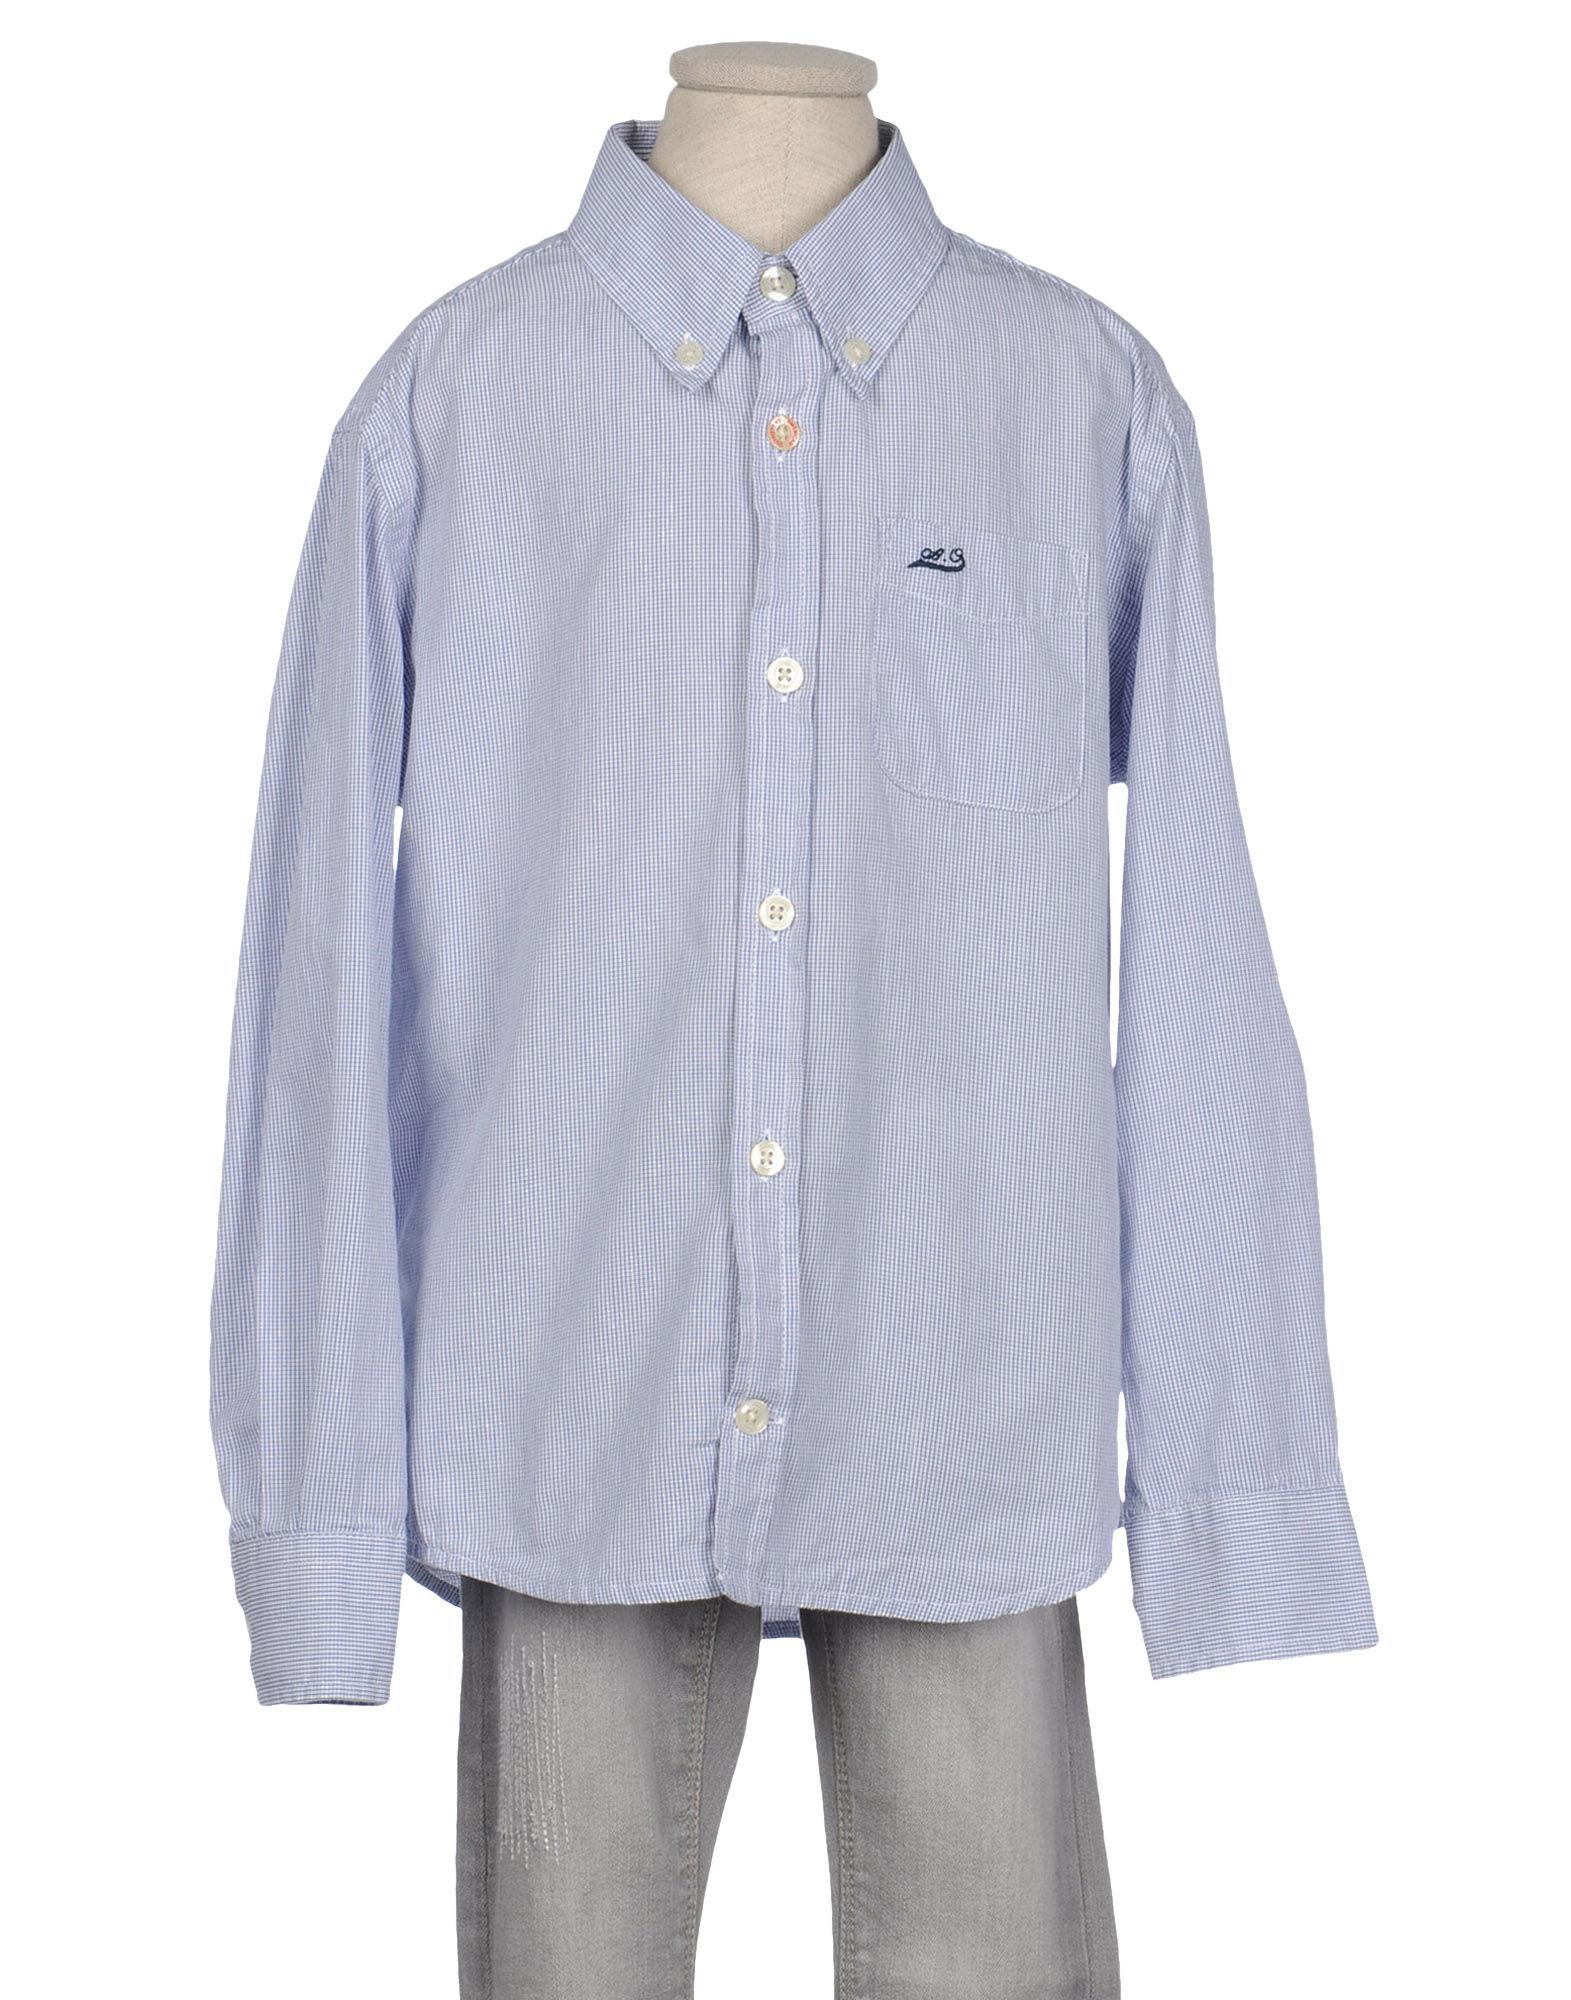 Foto American Outfitters Camisas De Manga Larga Niño Azul marino